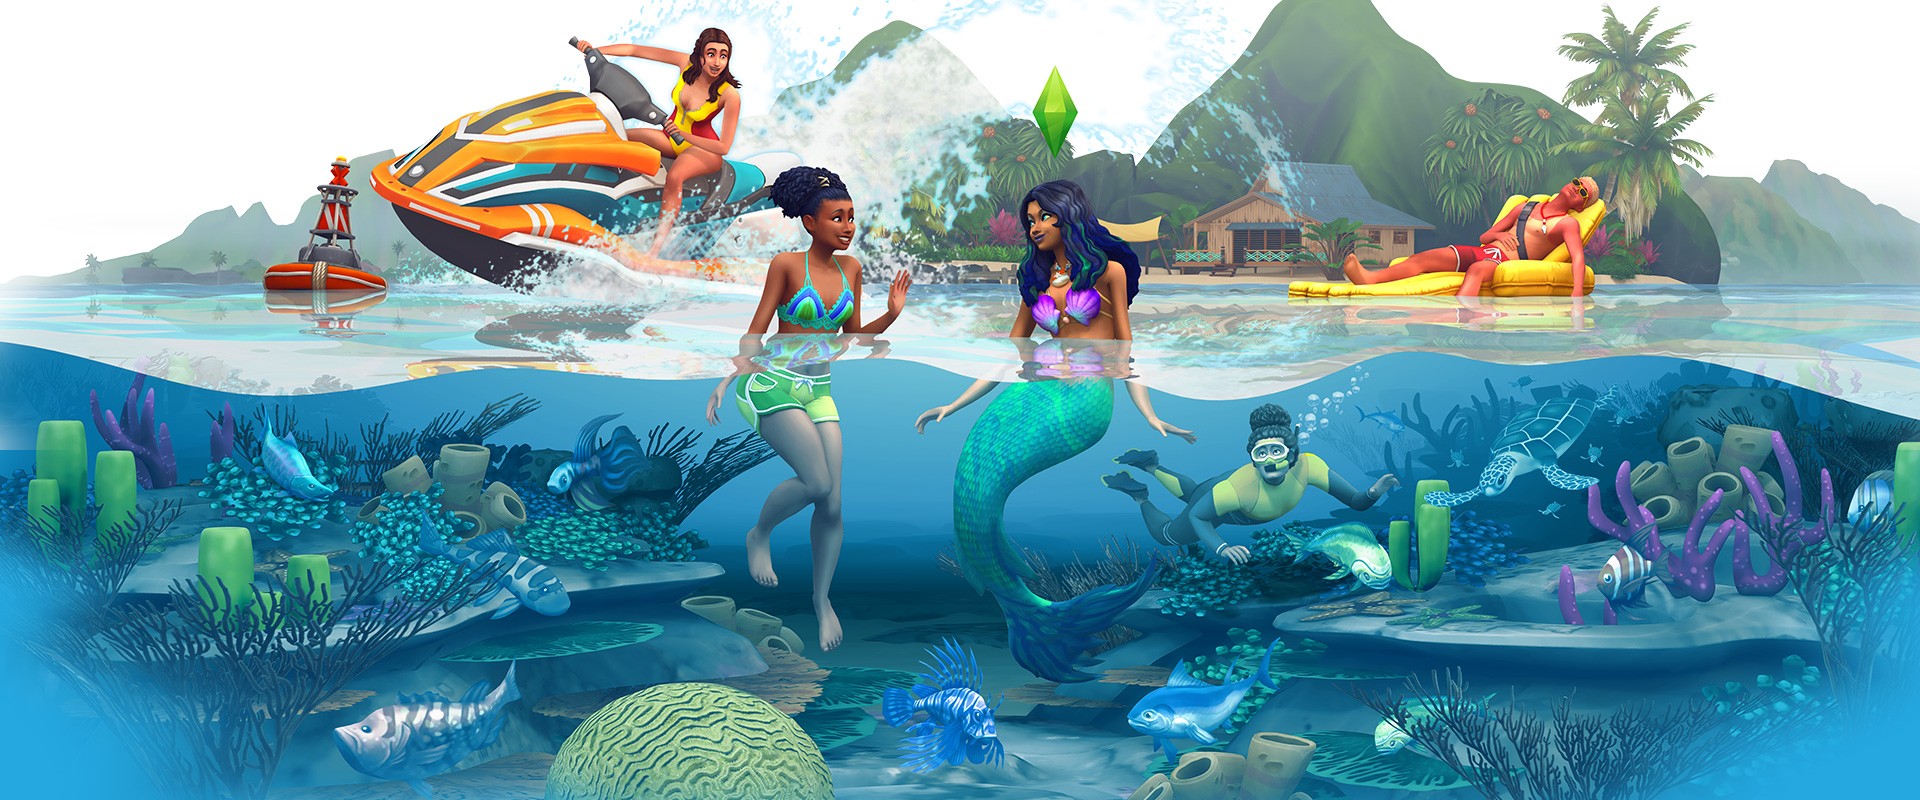 The Sims 4 Island Living First Screenshots Game Description Simsvip